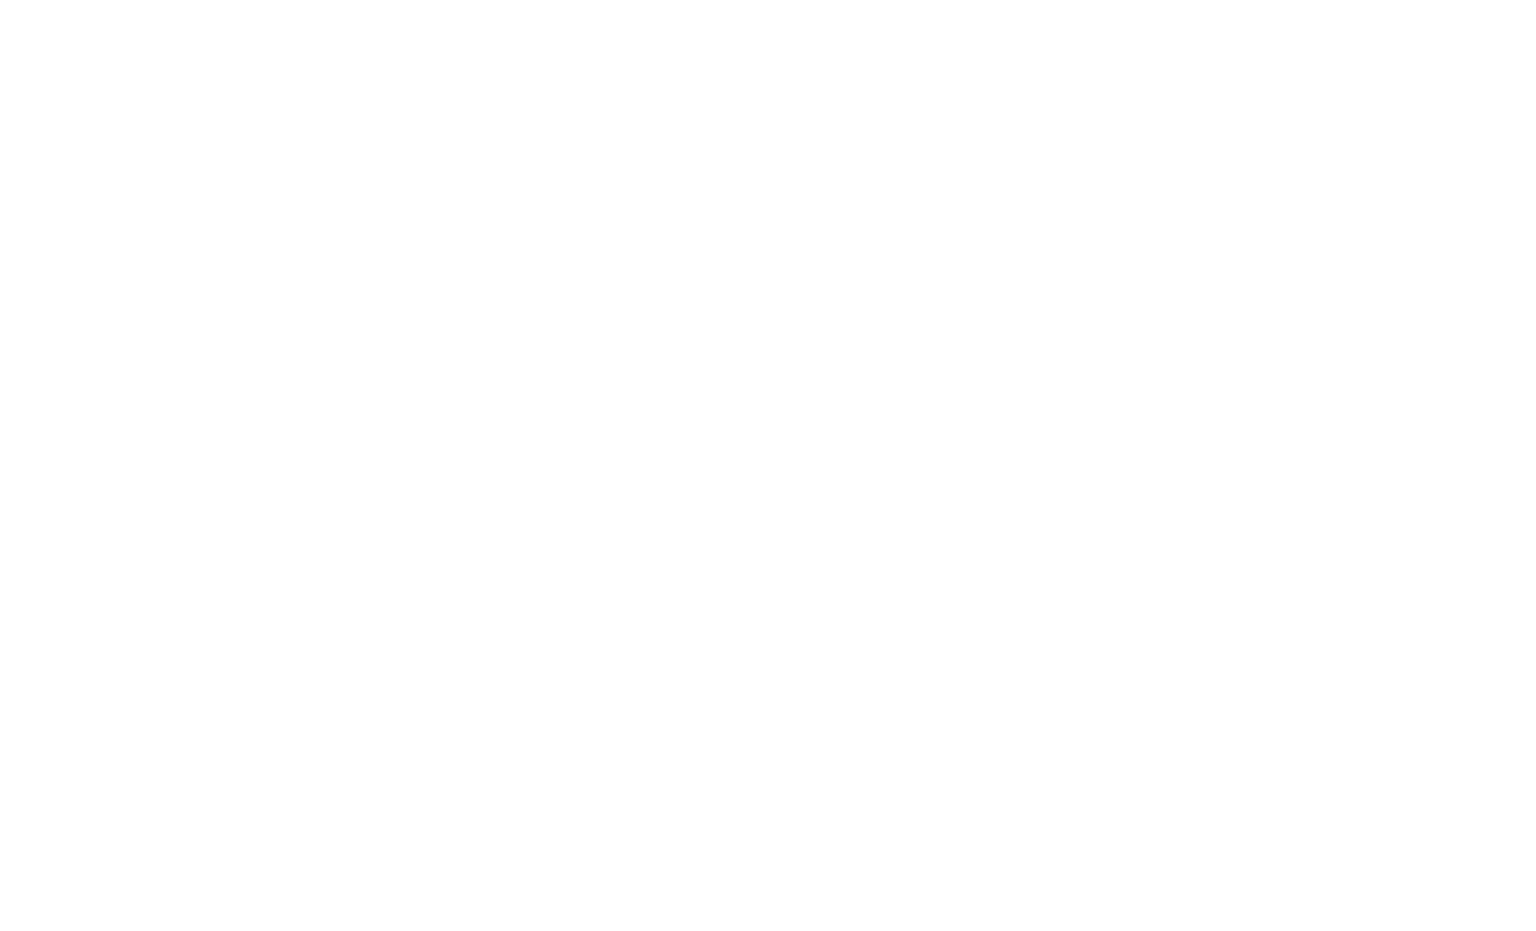 ascent aesthetics logo